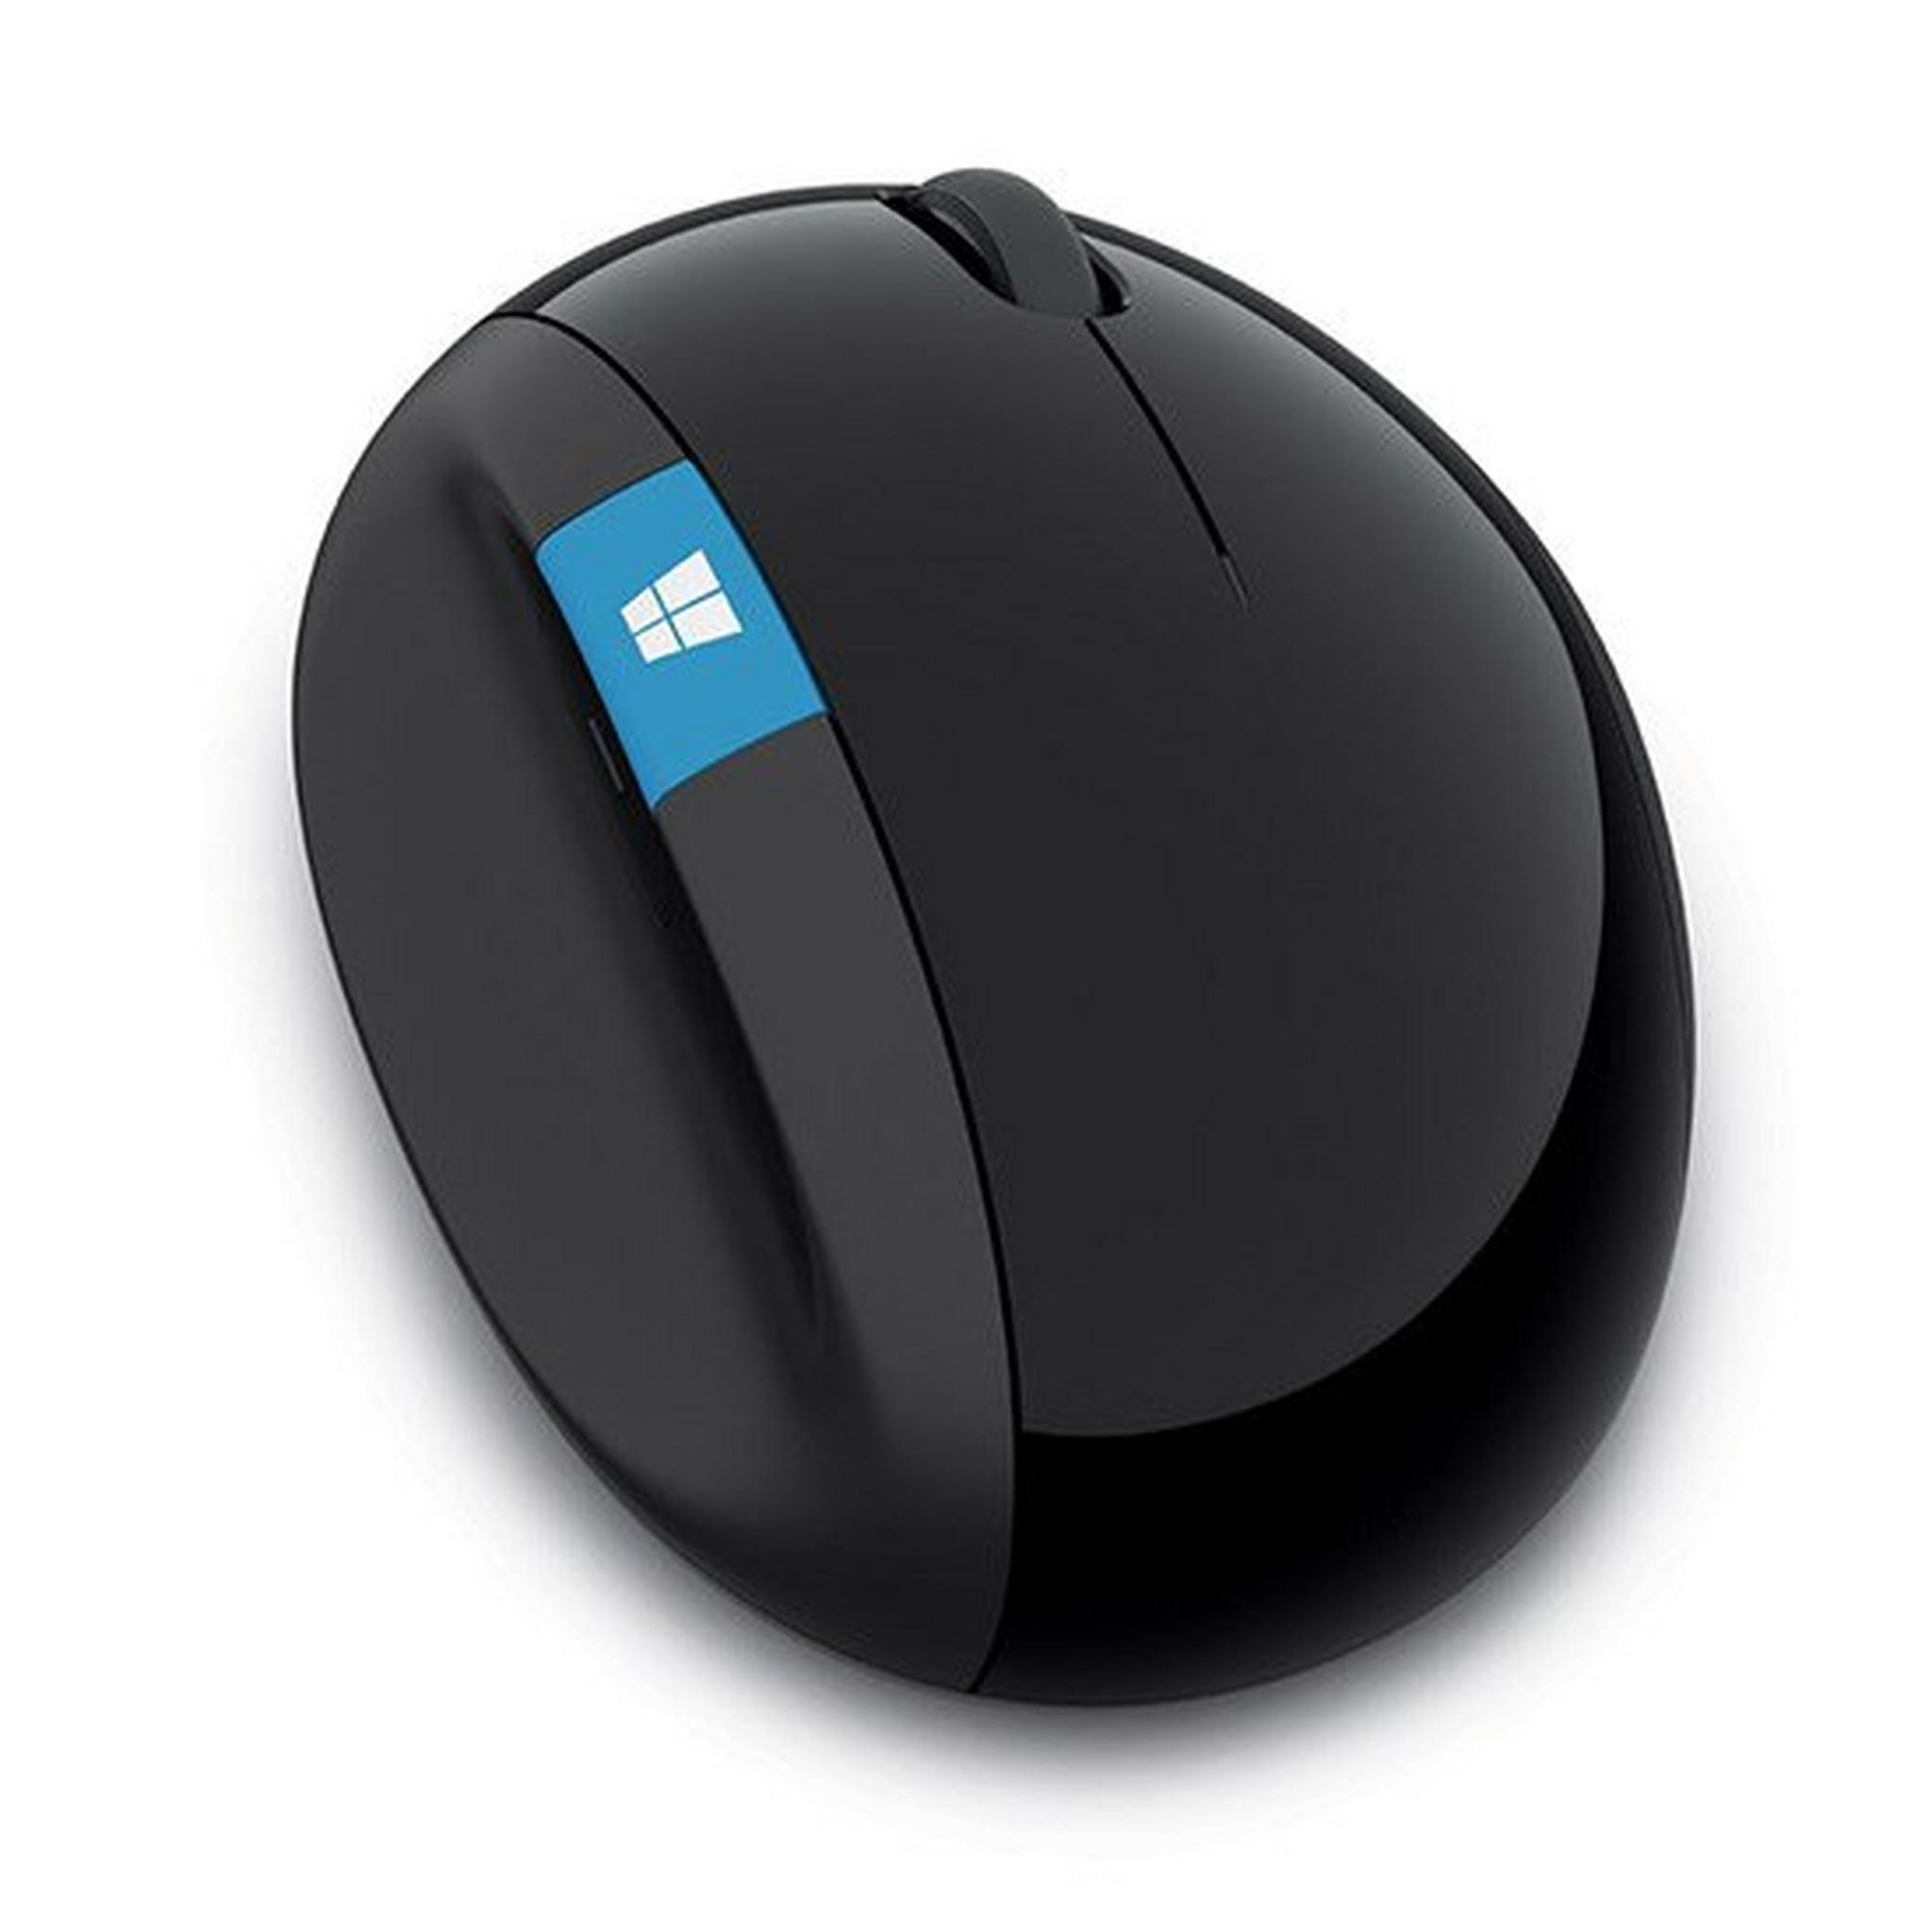 Microsoft Sculpt Ergonomic Wireless Keyboard + Mouse - Black